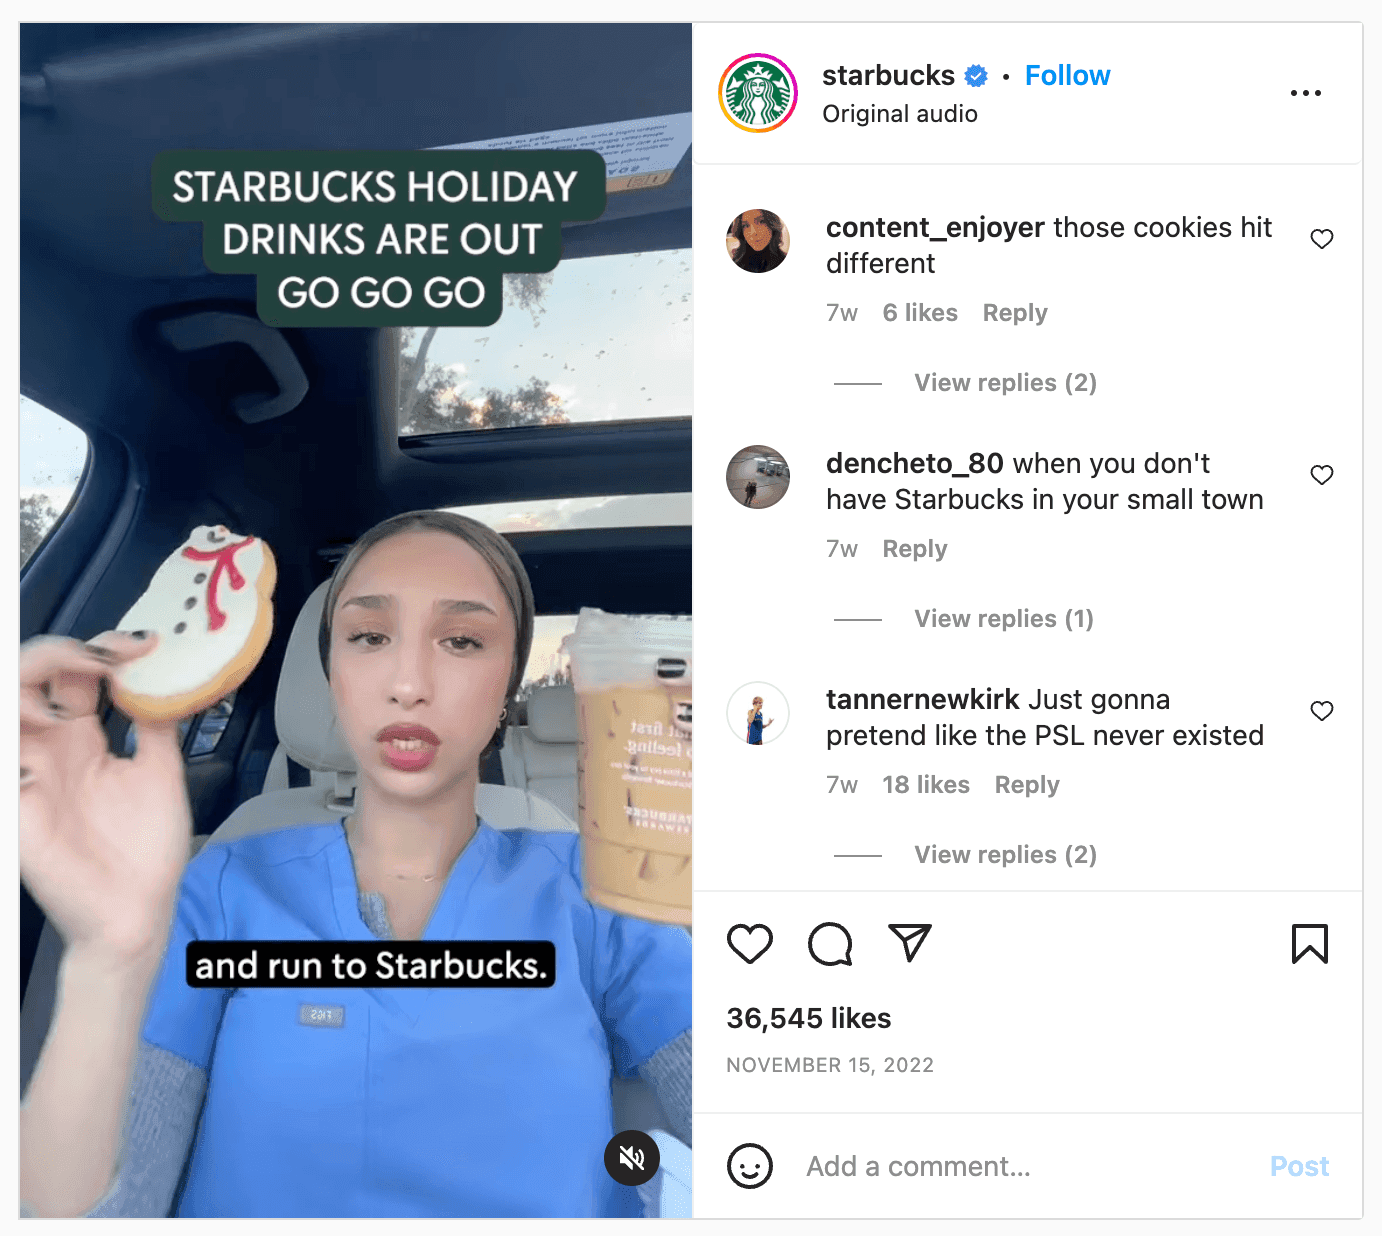 Starbucks Instagram post using user generated content